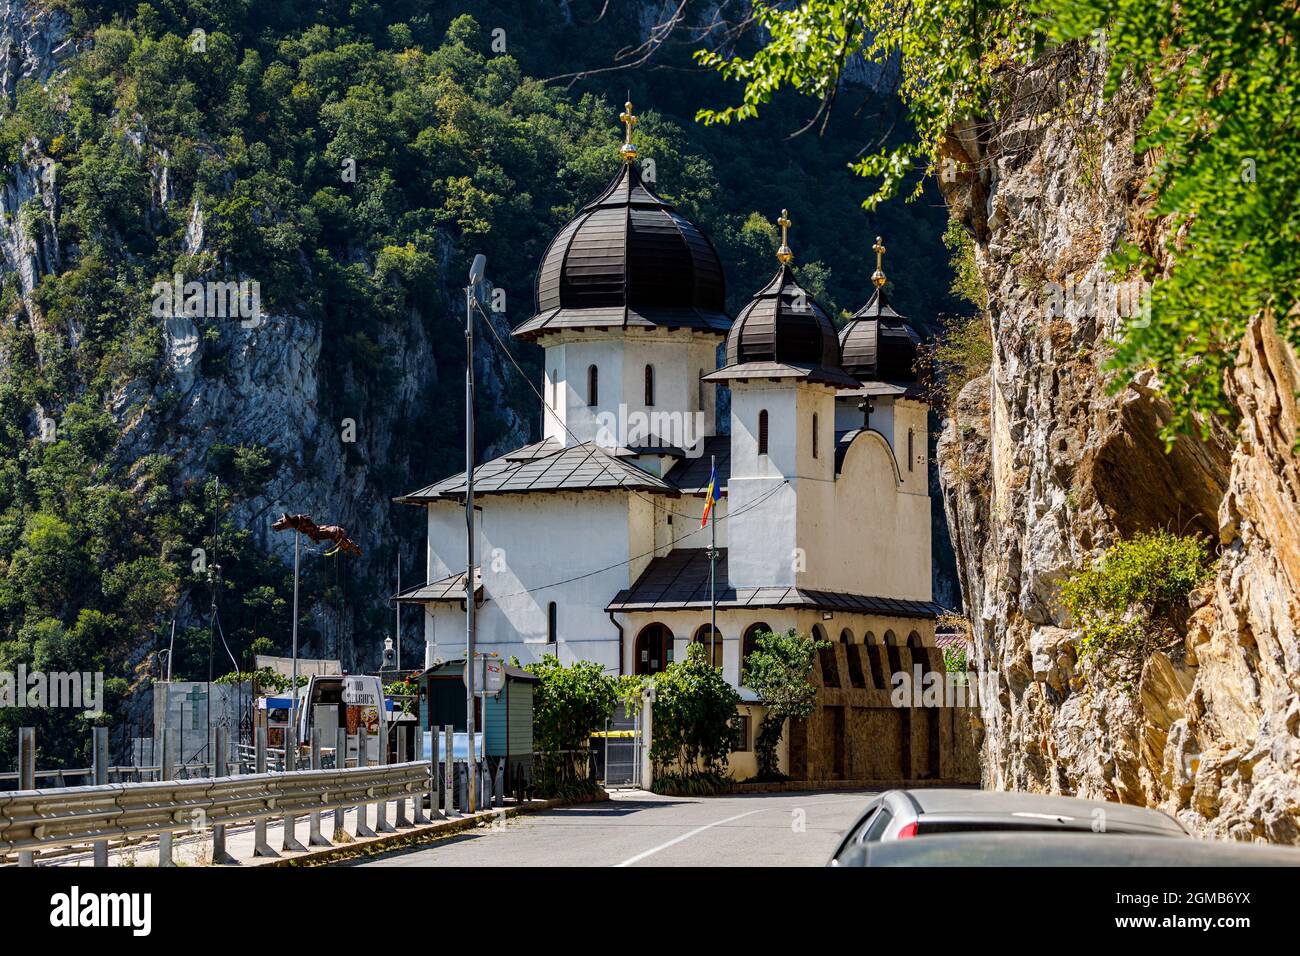 The Mraconia Monastery at the Danube River in Romania Stock Photo